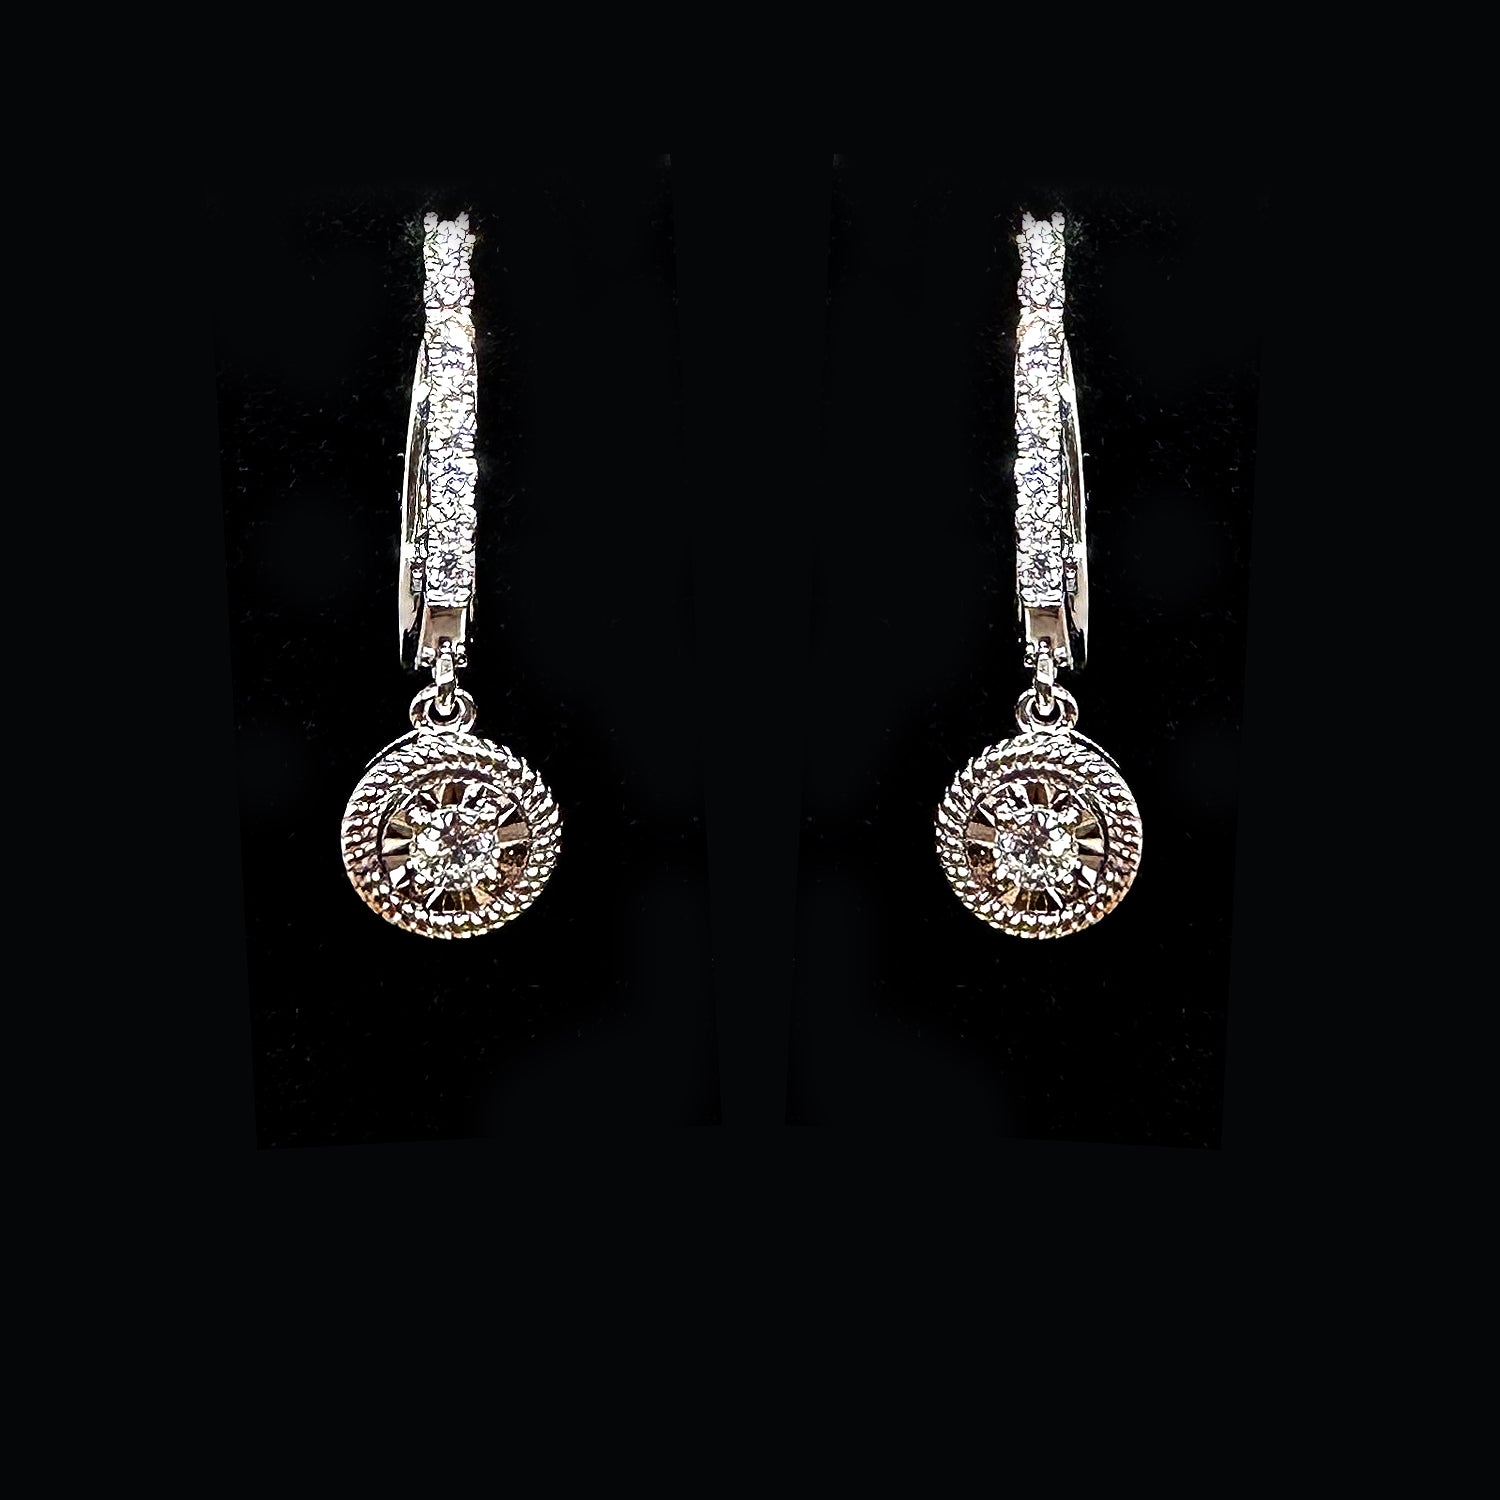 36875 - 18k diamond shiny earrings